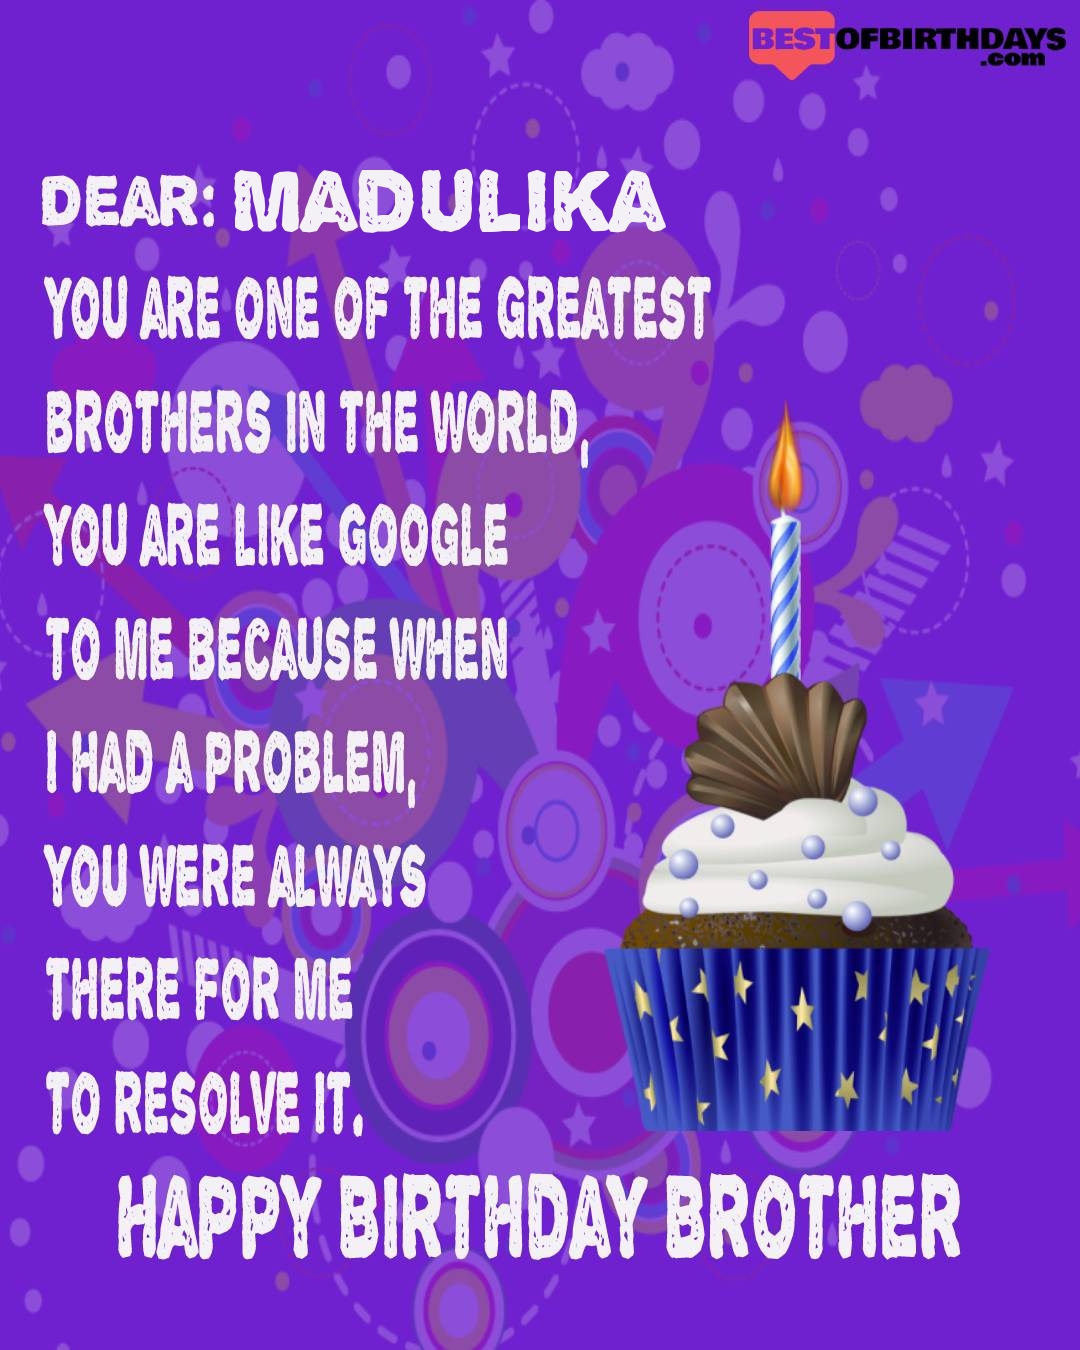 Happy birthday madulika bhai brother bro